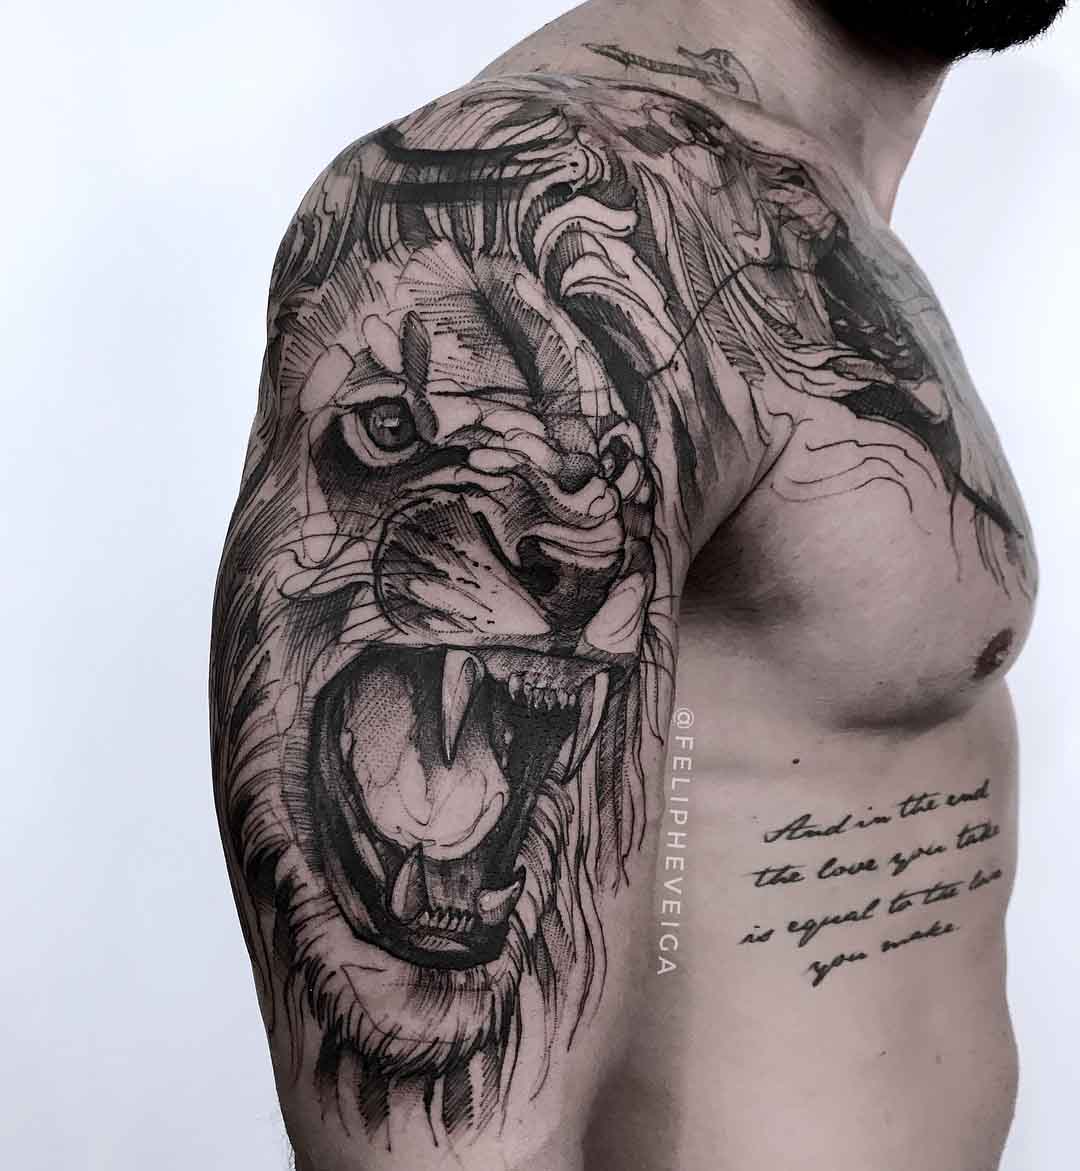 Top 63 Lion Sleeve Tattoo Ideas - [2021 Inspiration Guide]